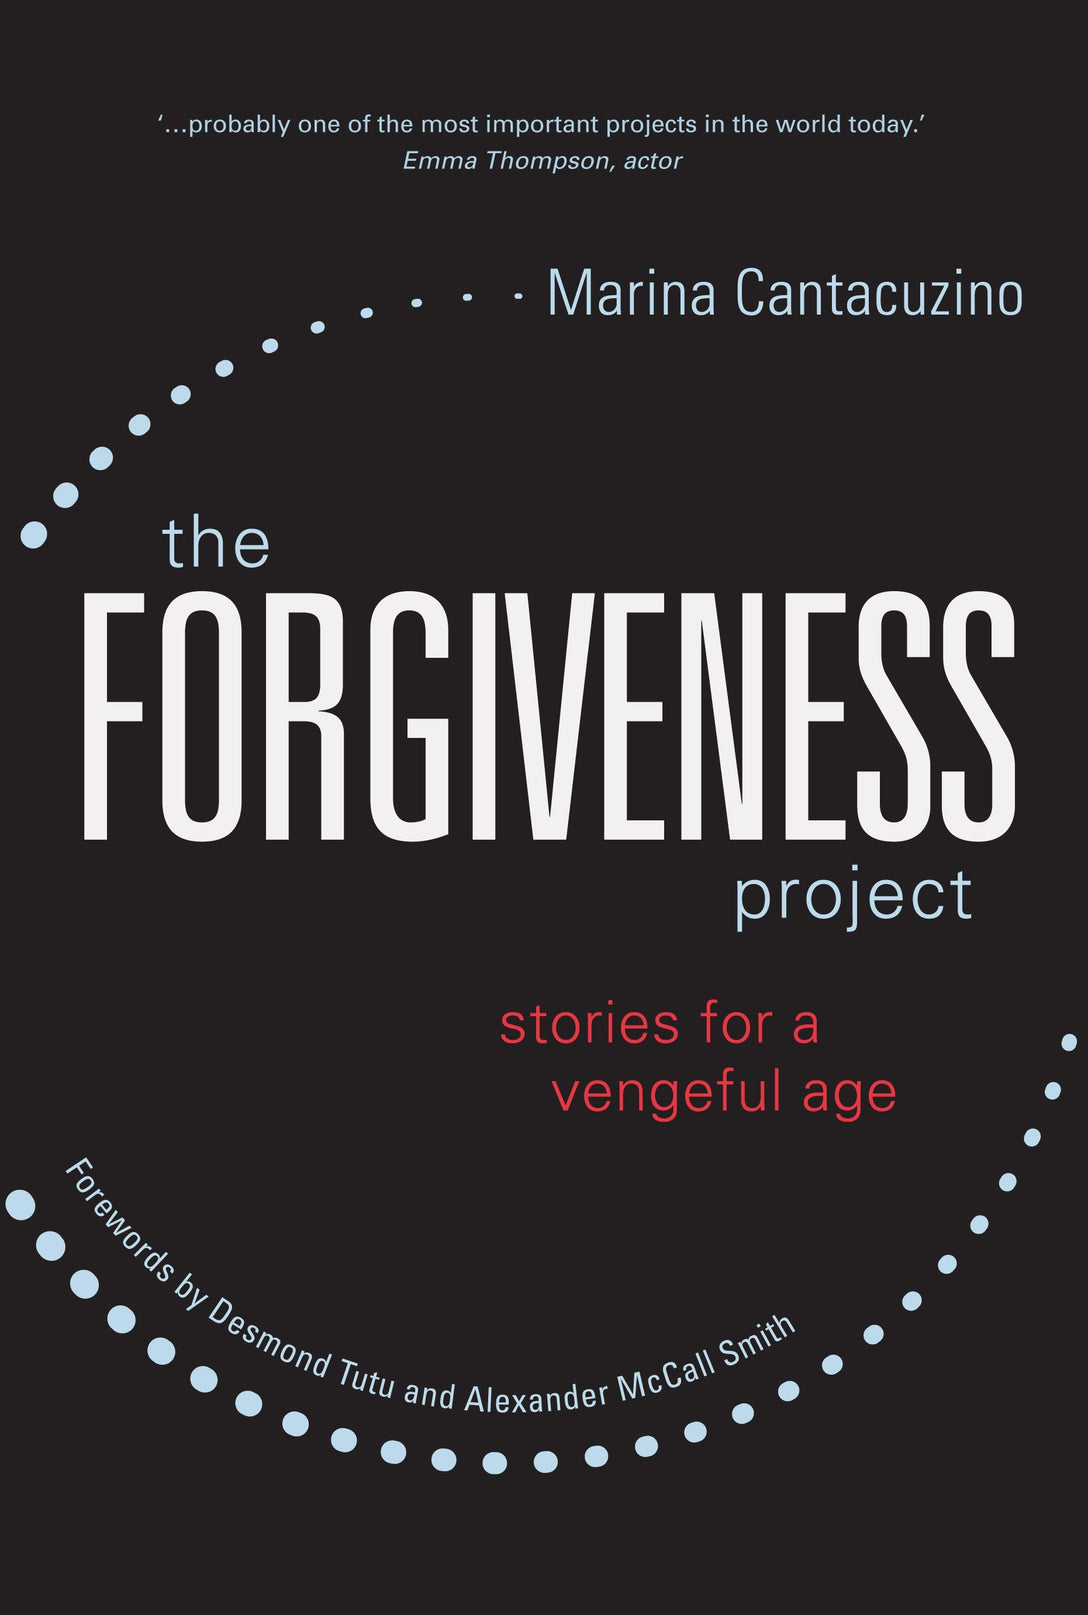 The Forgiveness Project by Archbishop Emeritus Desmond Tutu, Alexander McCall McCall Smith, Marina Cantacuzino